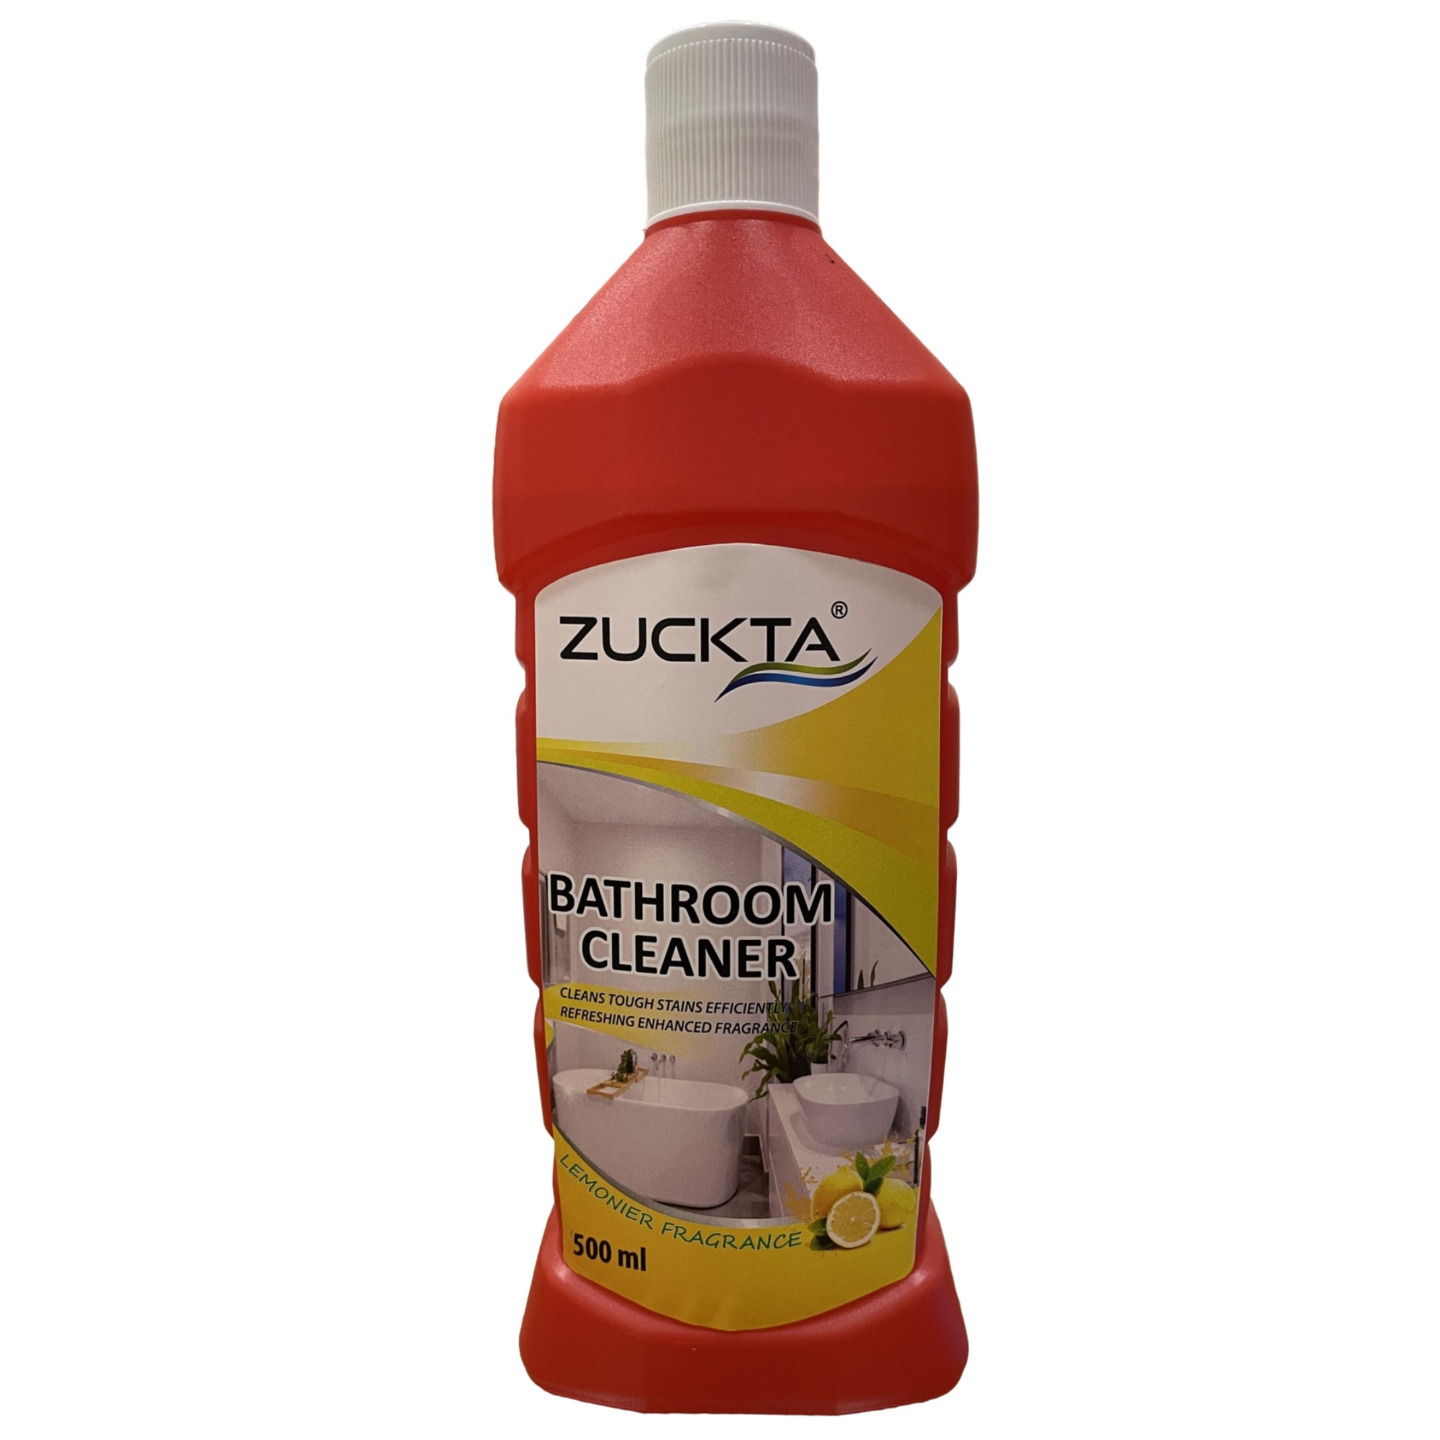 ZUCKTA Bathroom Cleaner 500 ml (Buy 1 Get 1 FREE)